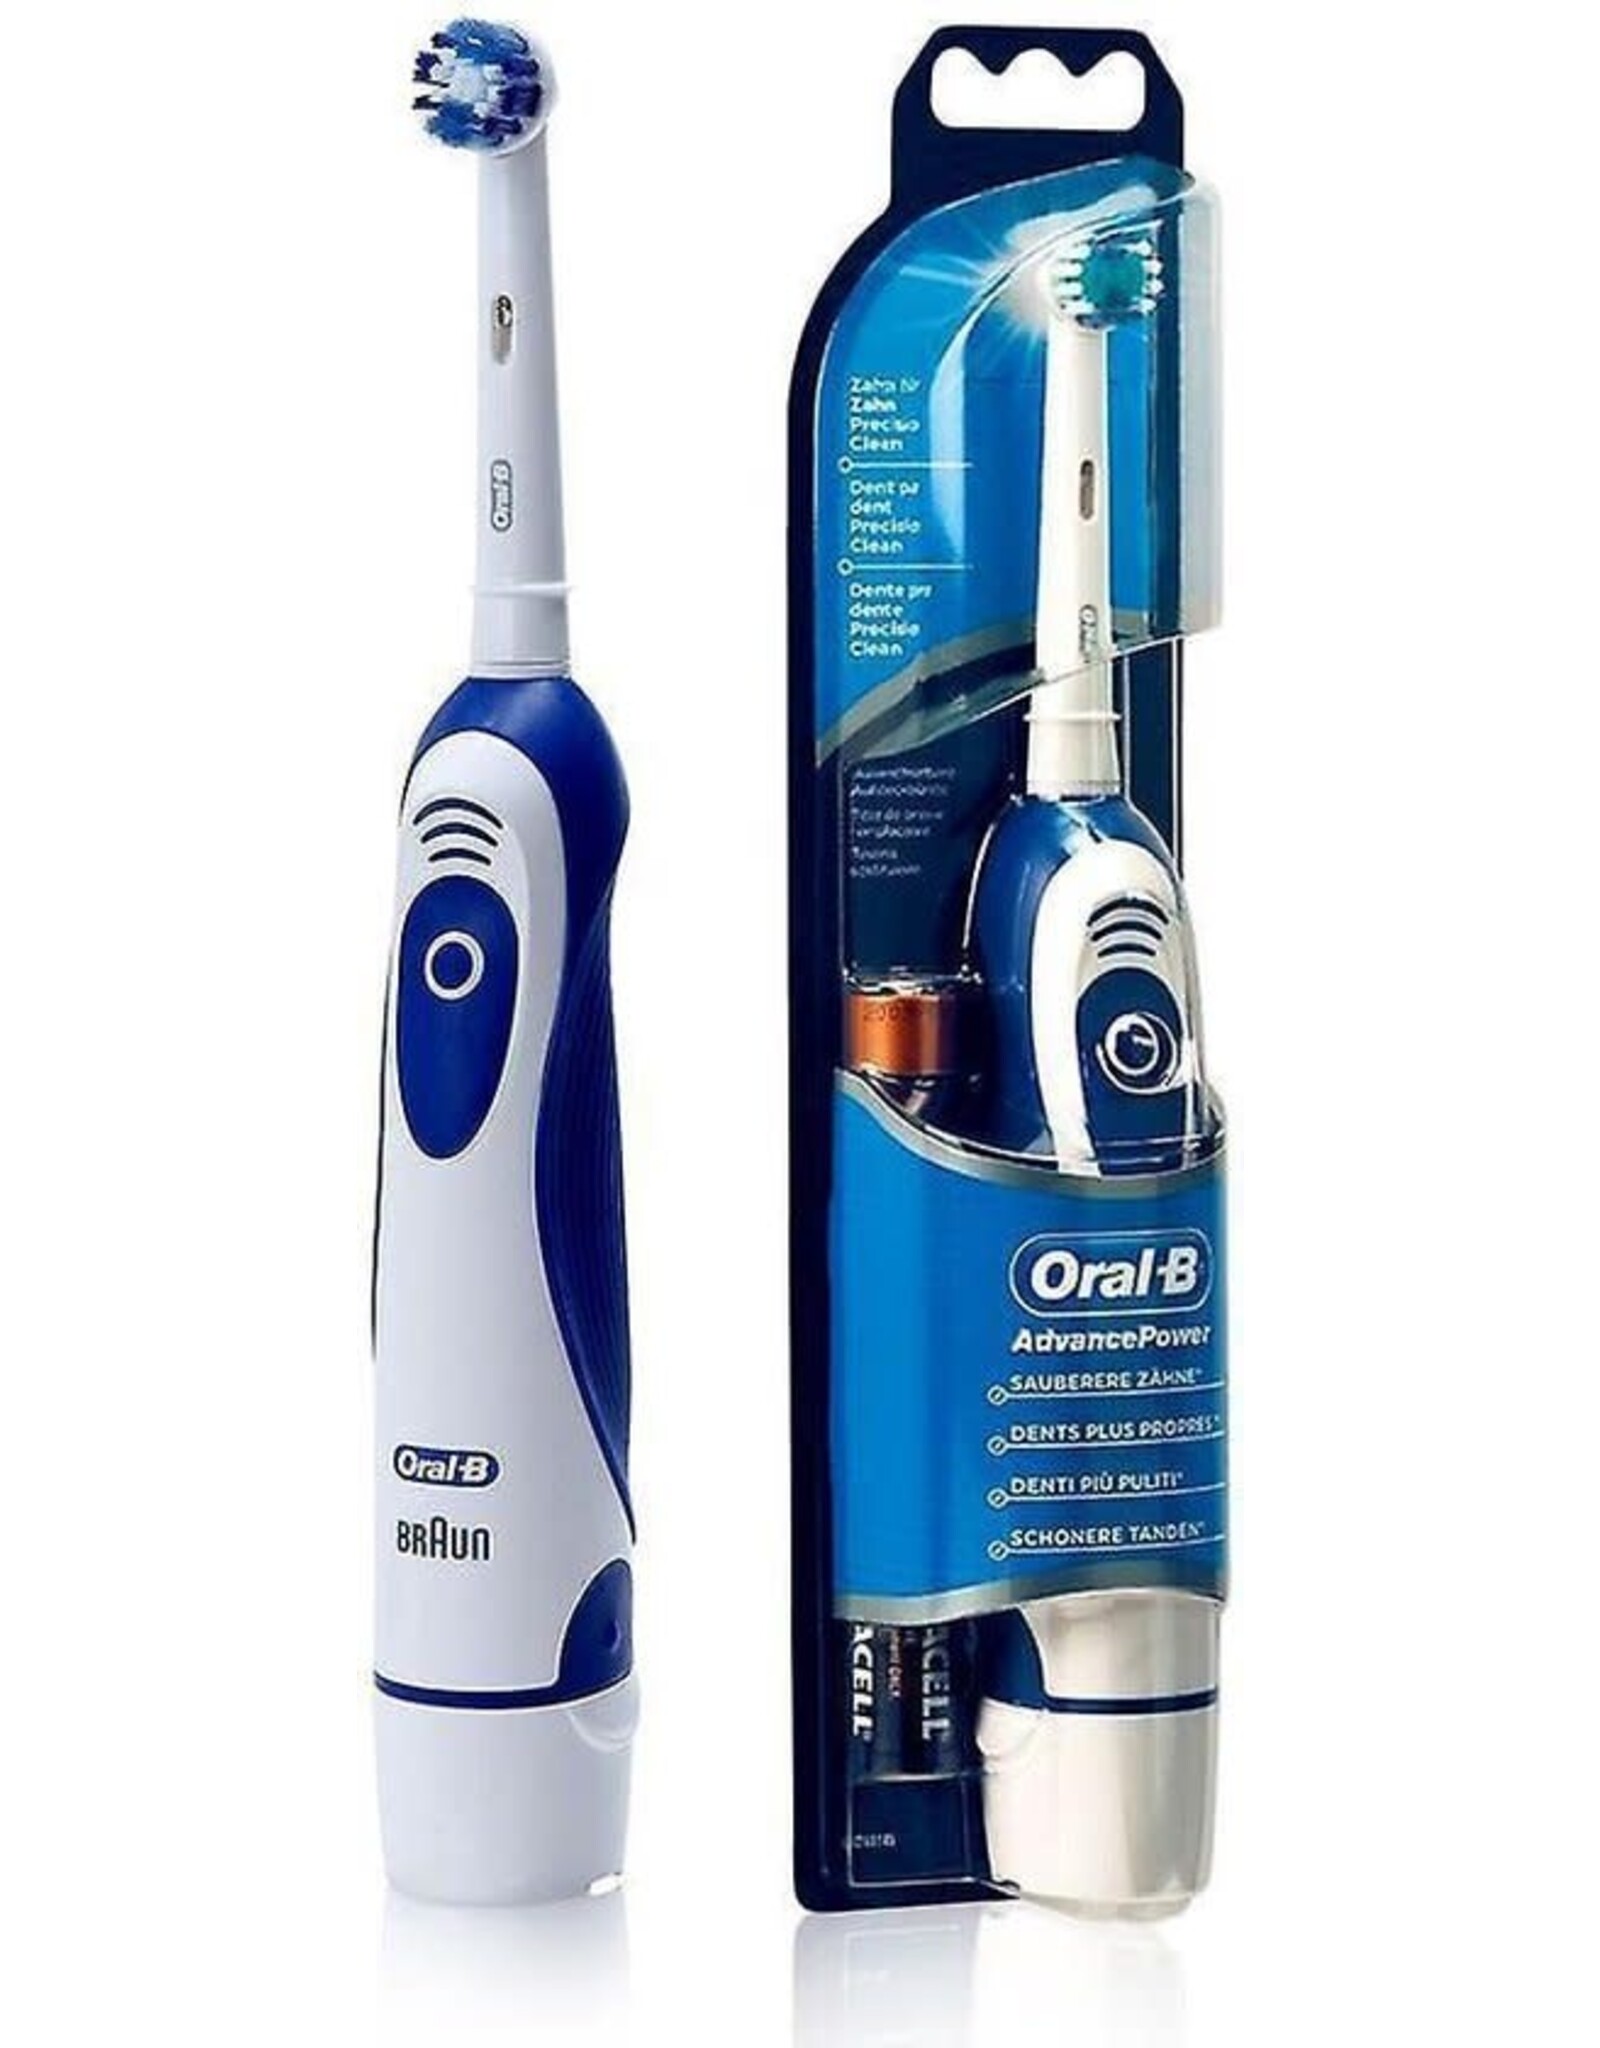 oral b Oral-B tandenborstel - AdvancePower - elektrische tandenborstel op batterijen